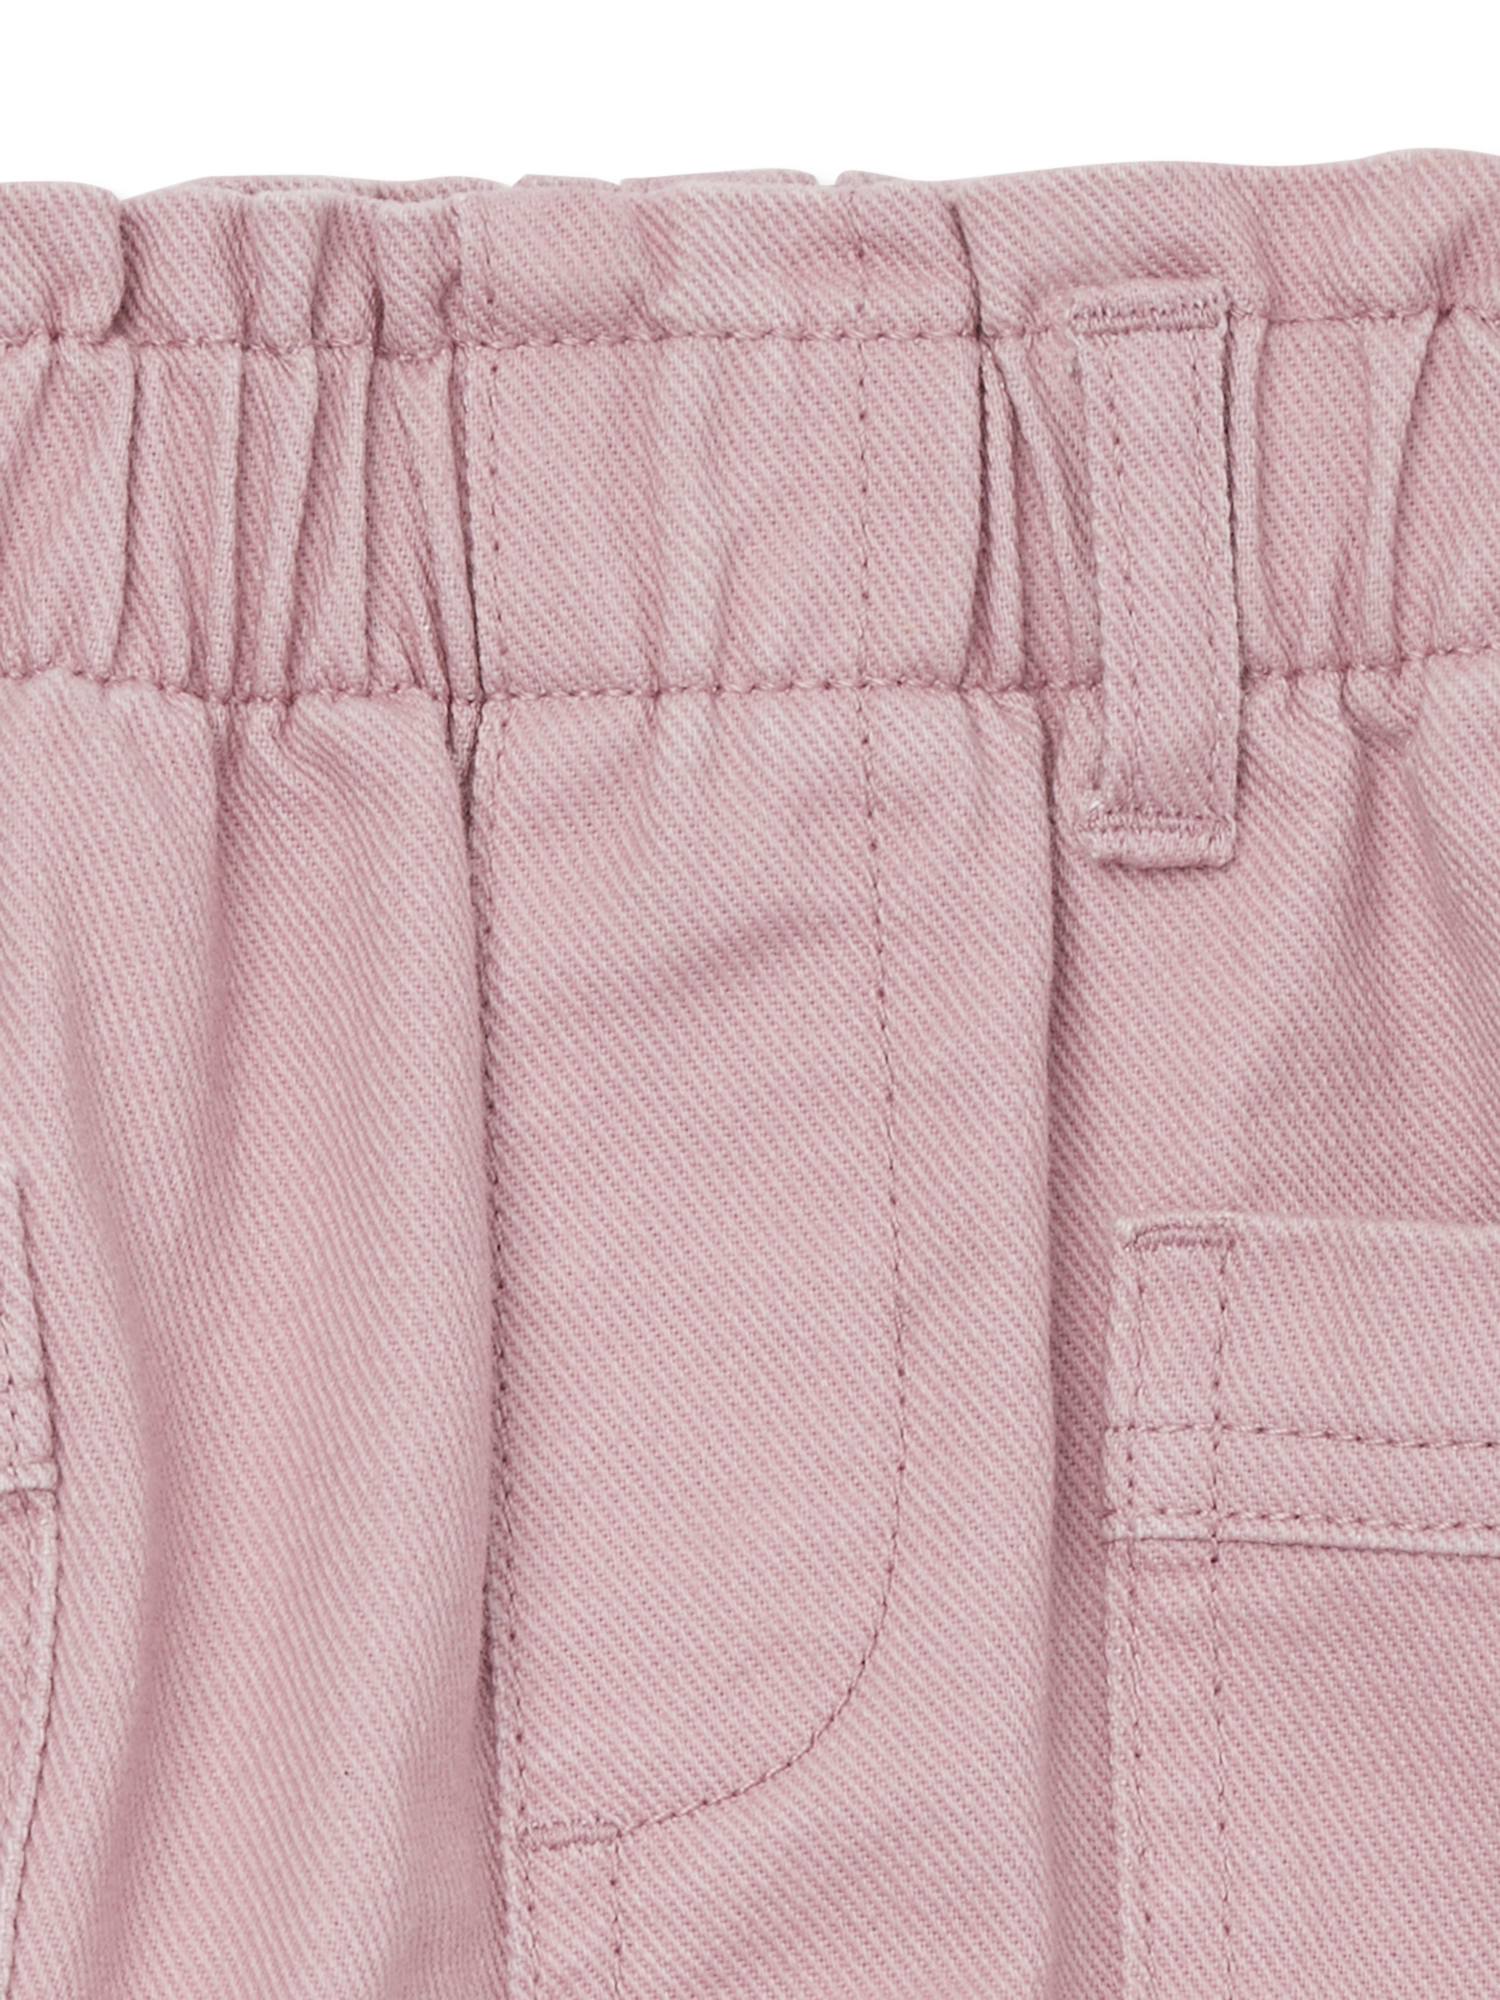 easy-peasy Toddler Girls Denim Shorts, Sizes 12M-5T - image 3 of 4